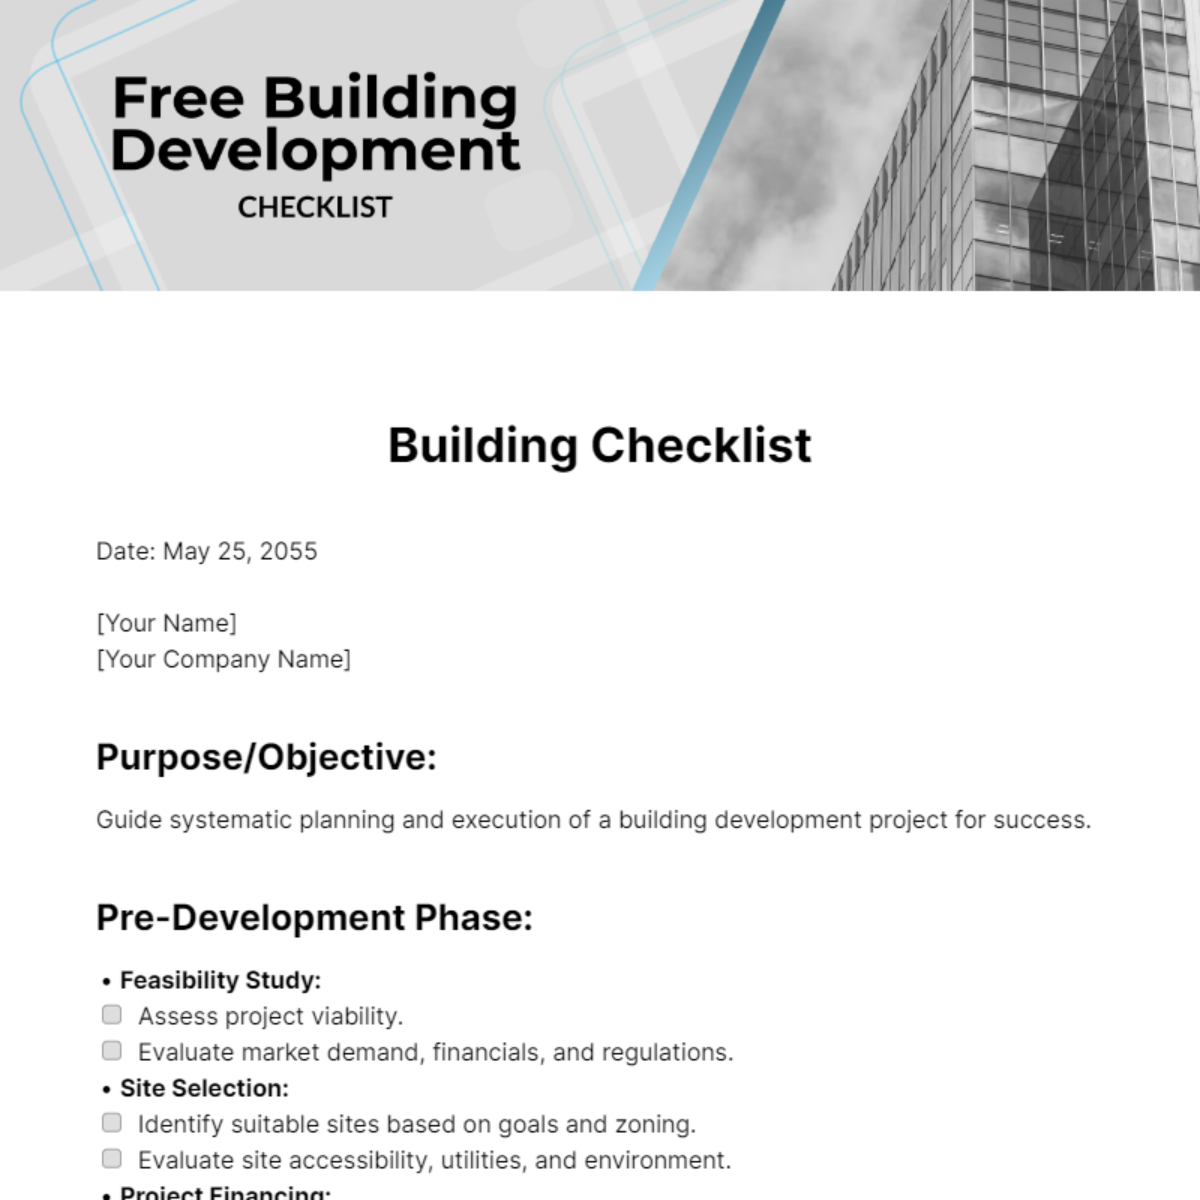 Free Building Development Checklist Template